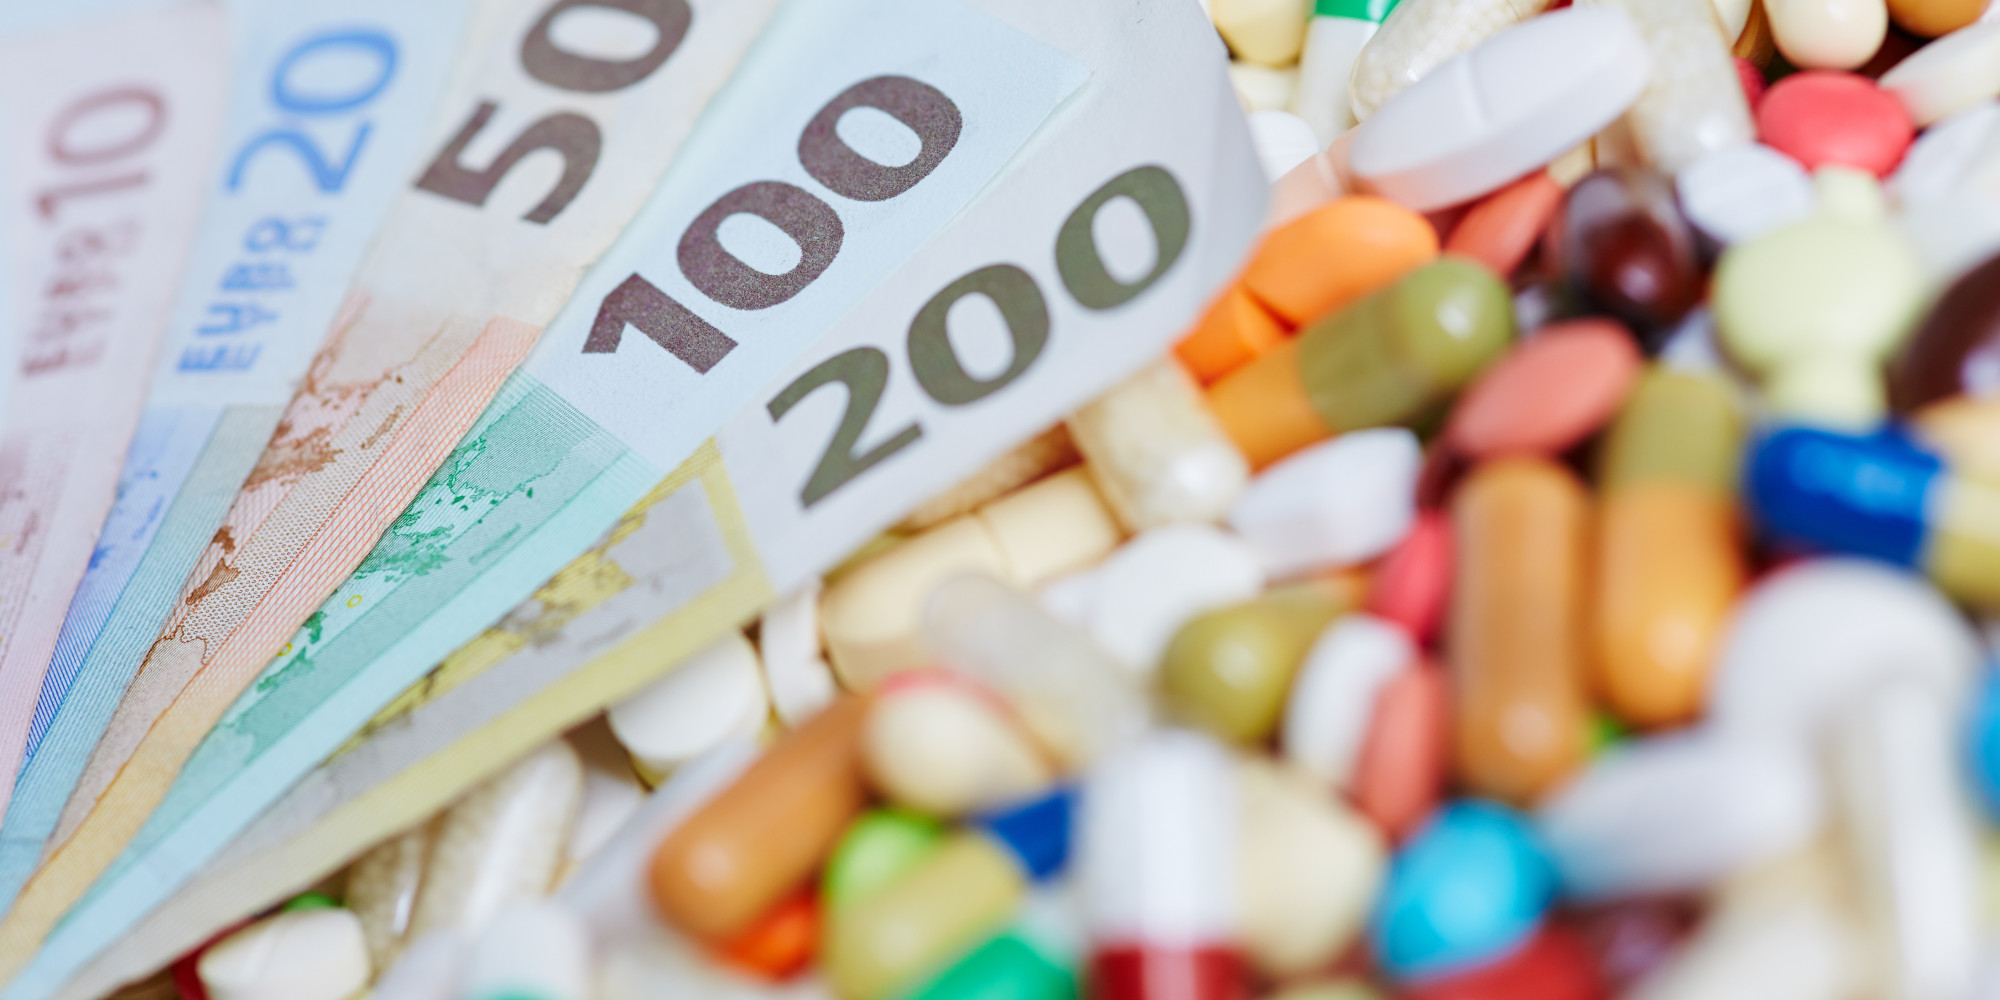 Pharmaceutical price regulation to impact economy